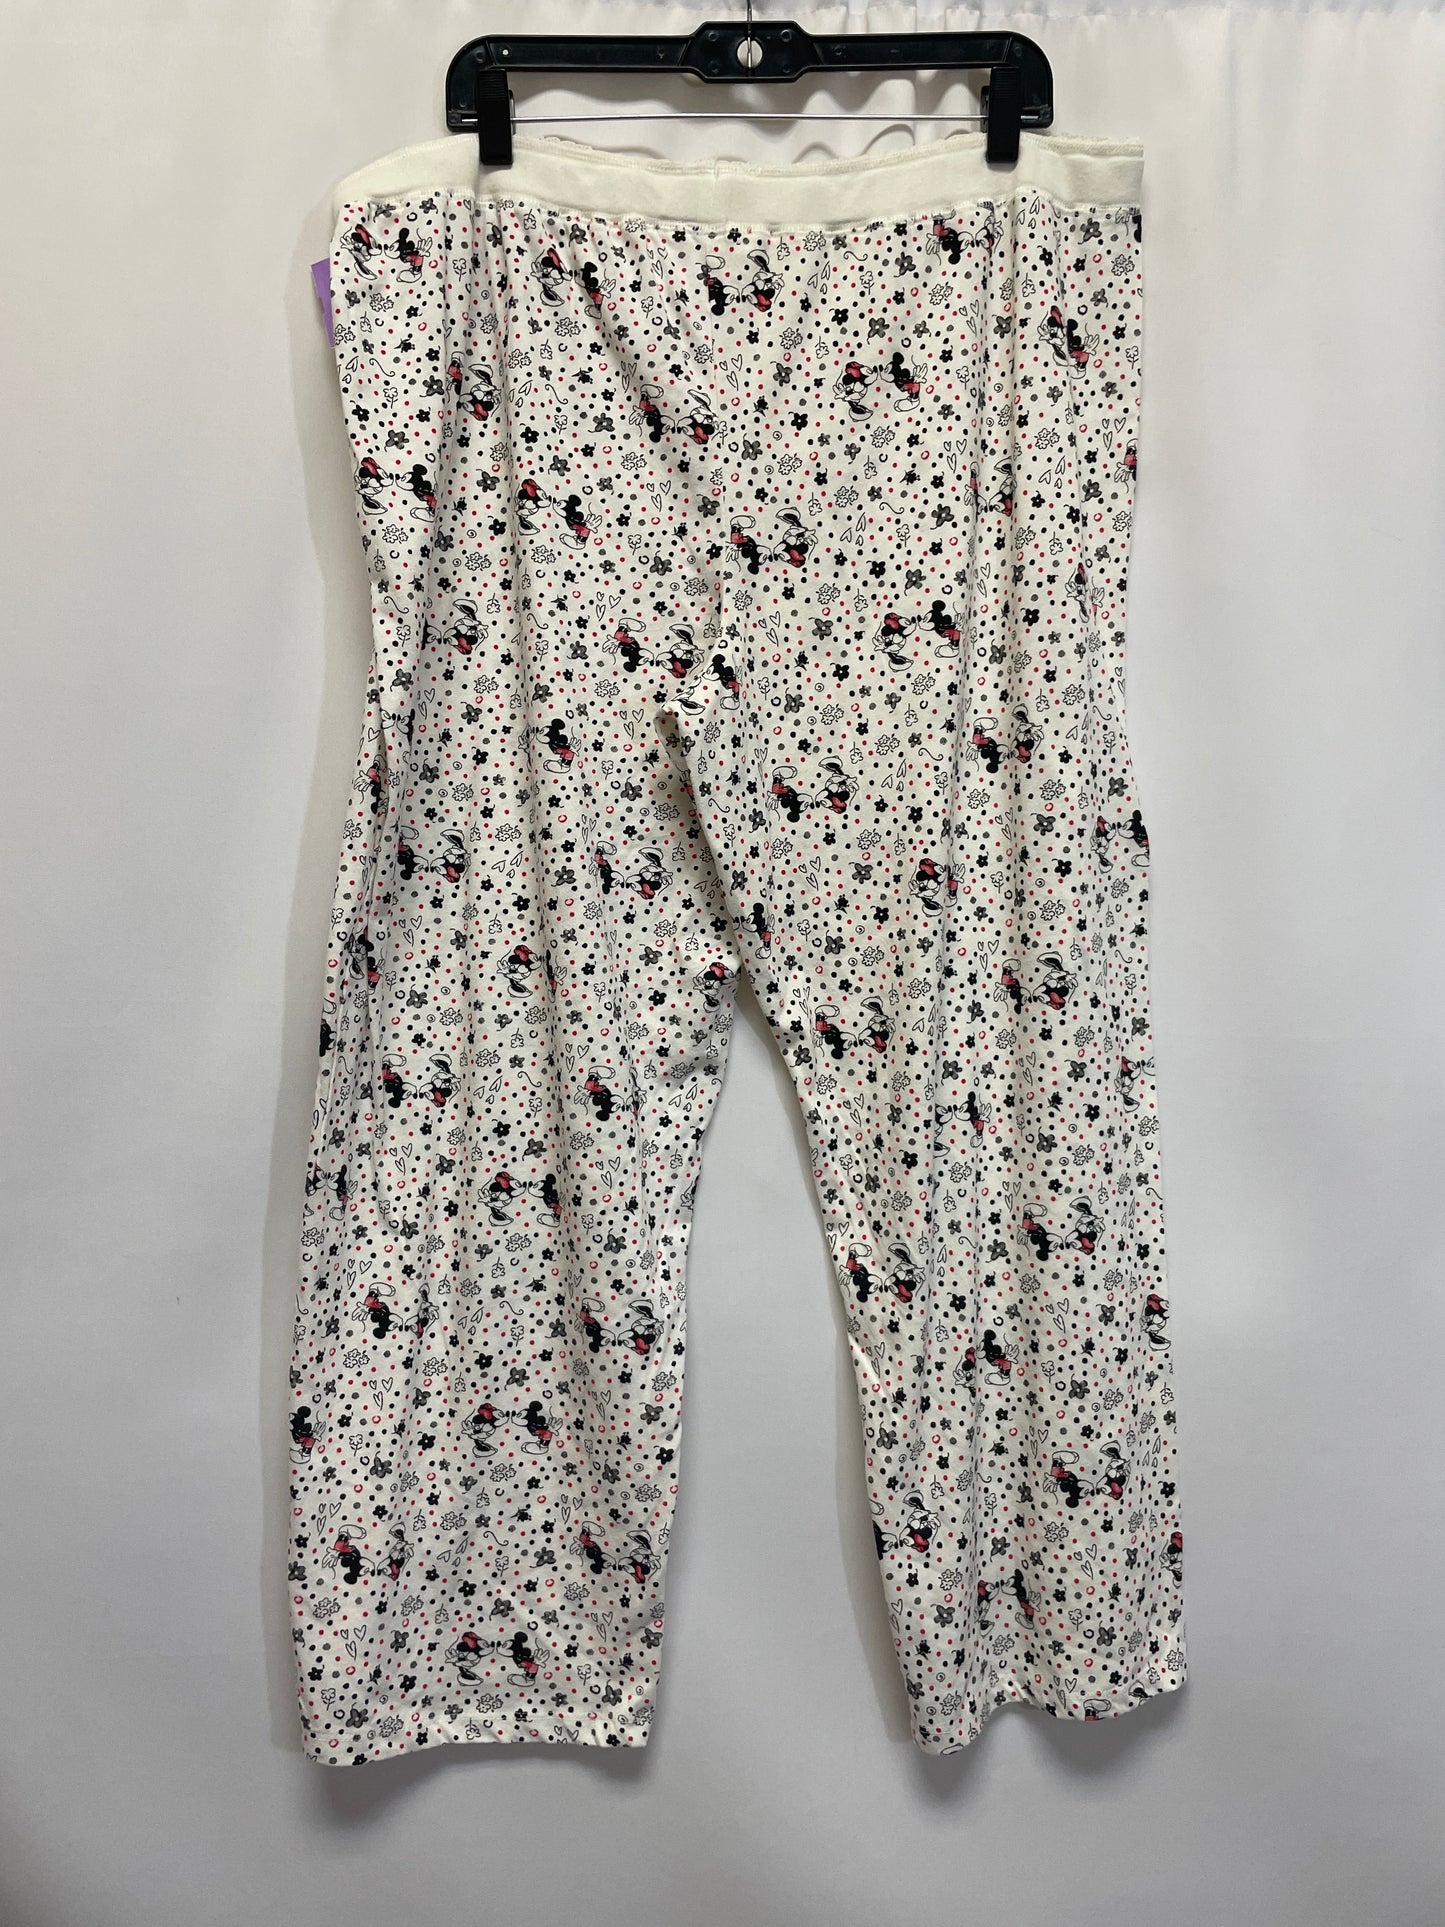 White Pajama Pants Disney Store, Size 2x